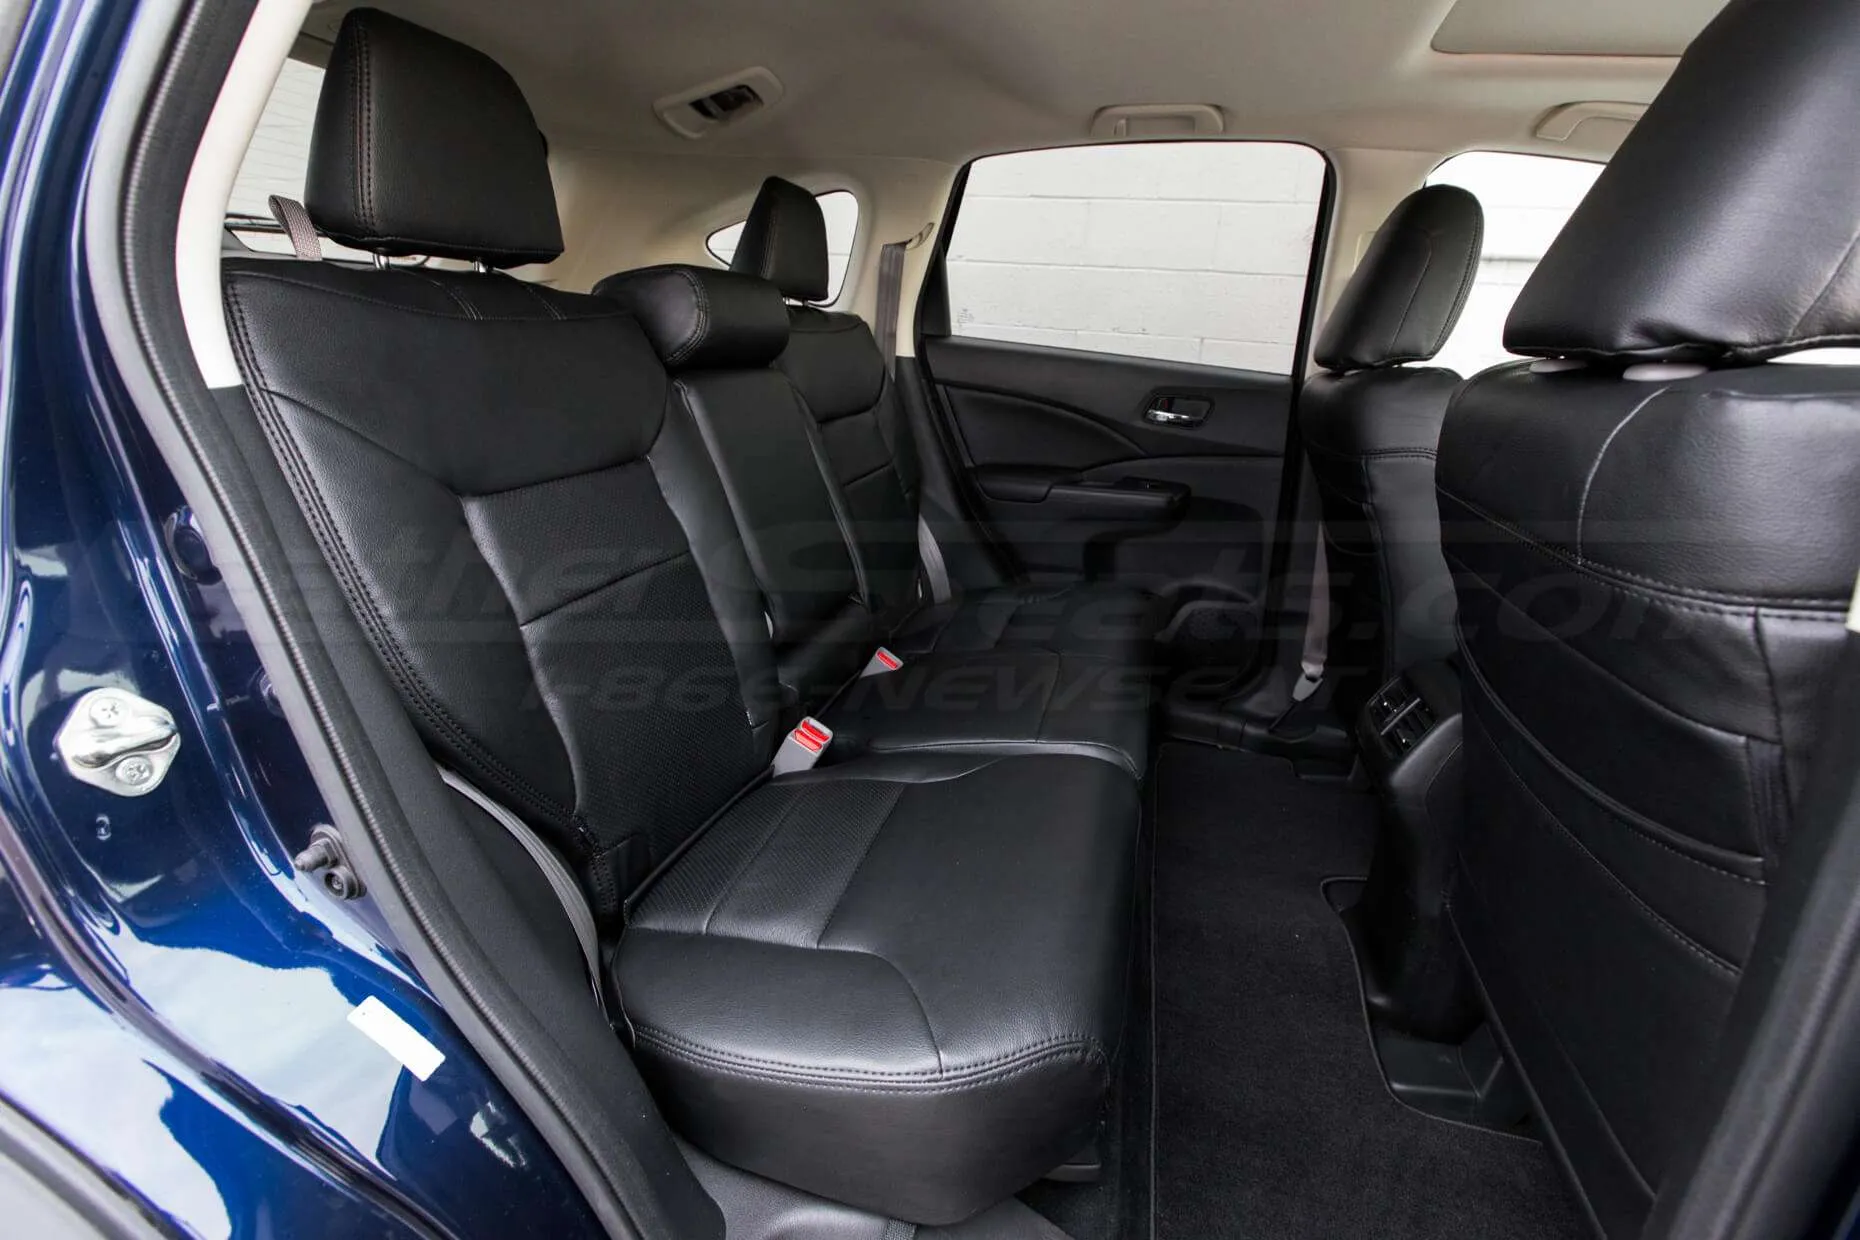 Honda CRV Leather Seat Kit - Black - Installed - Rear seats - side view